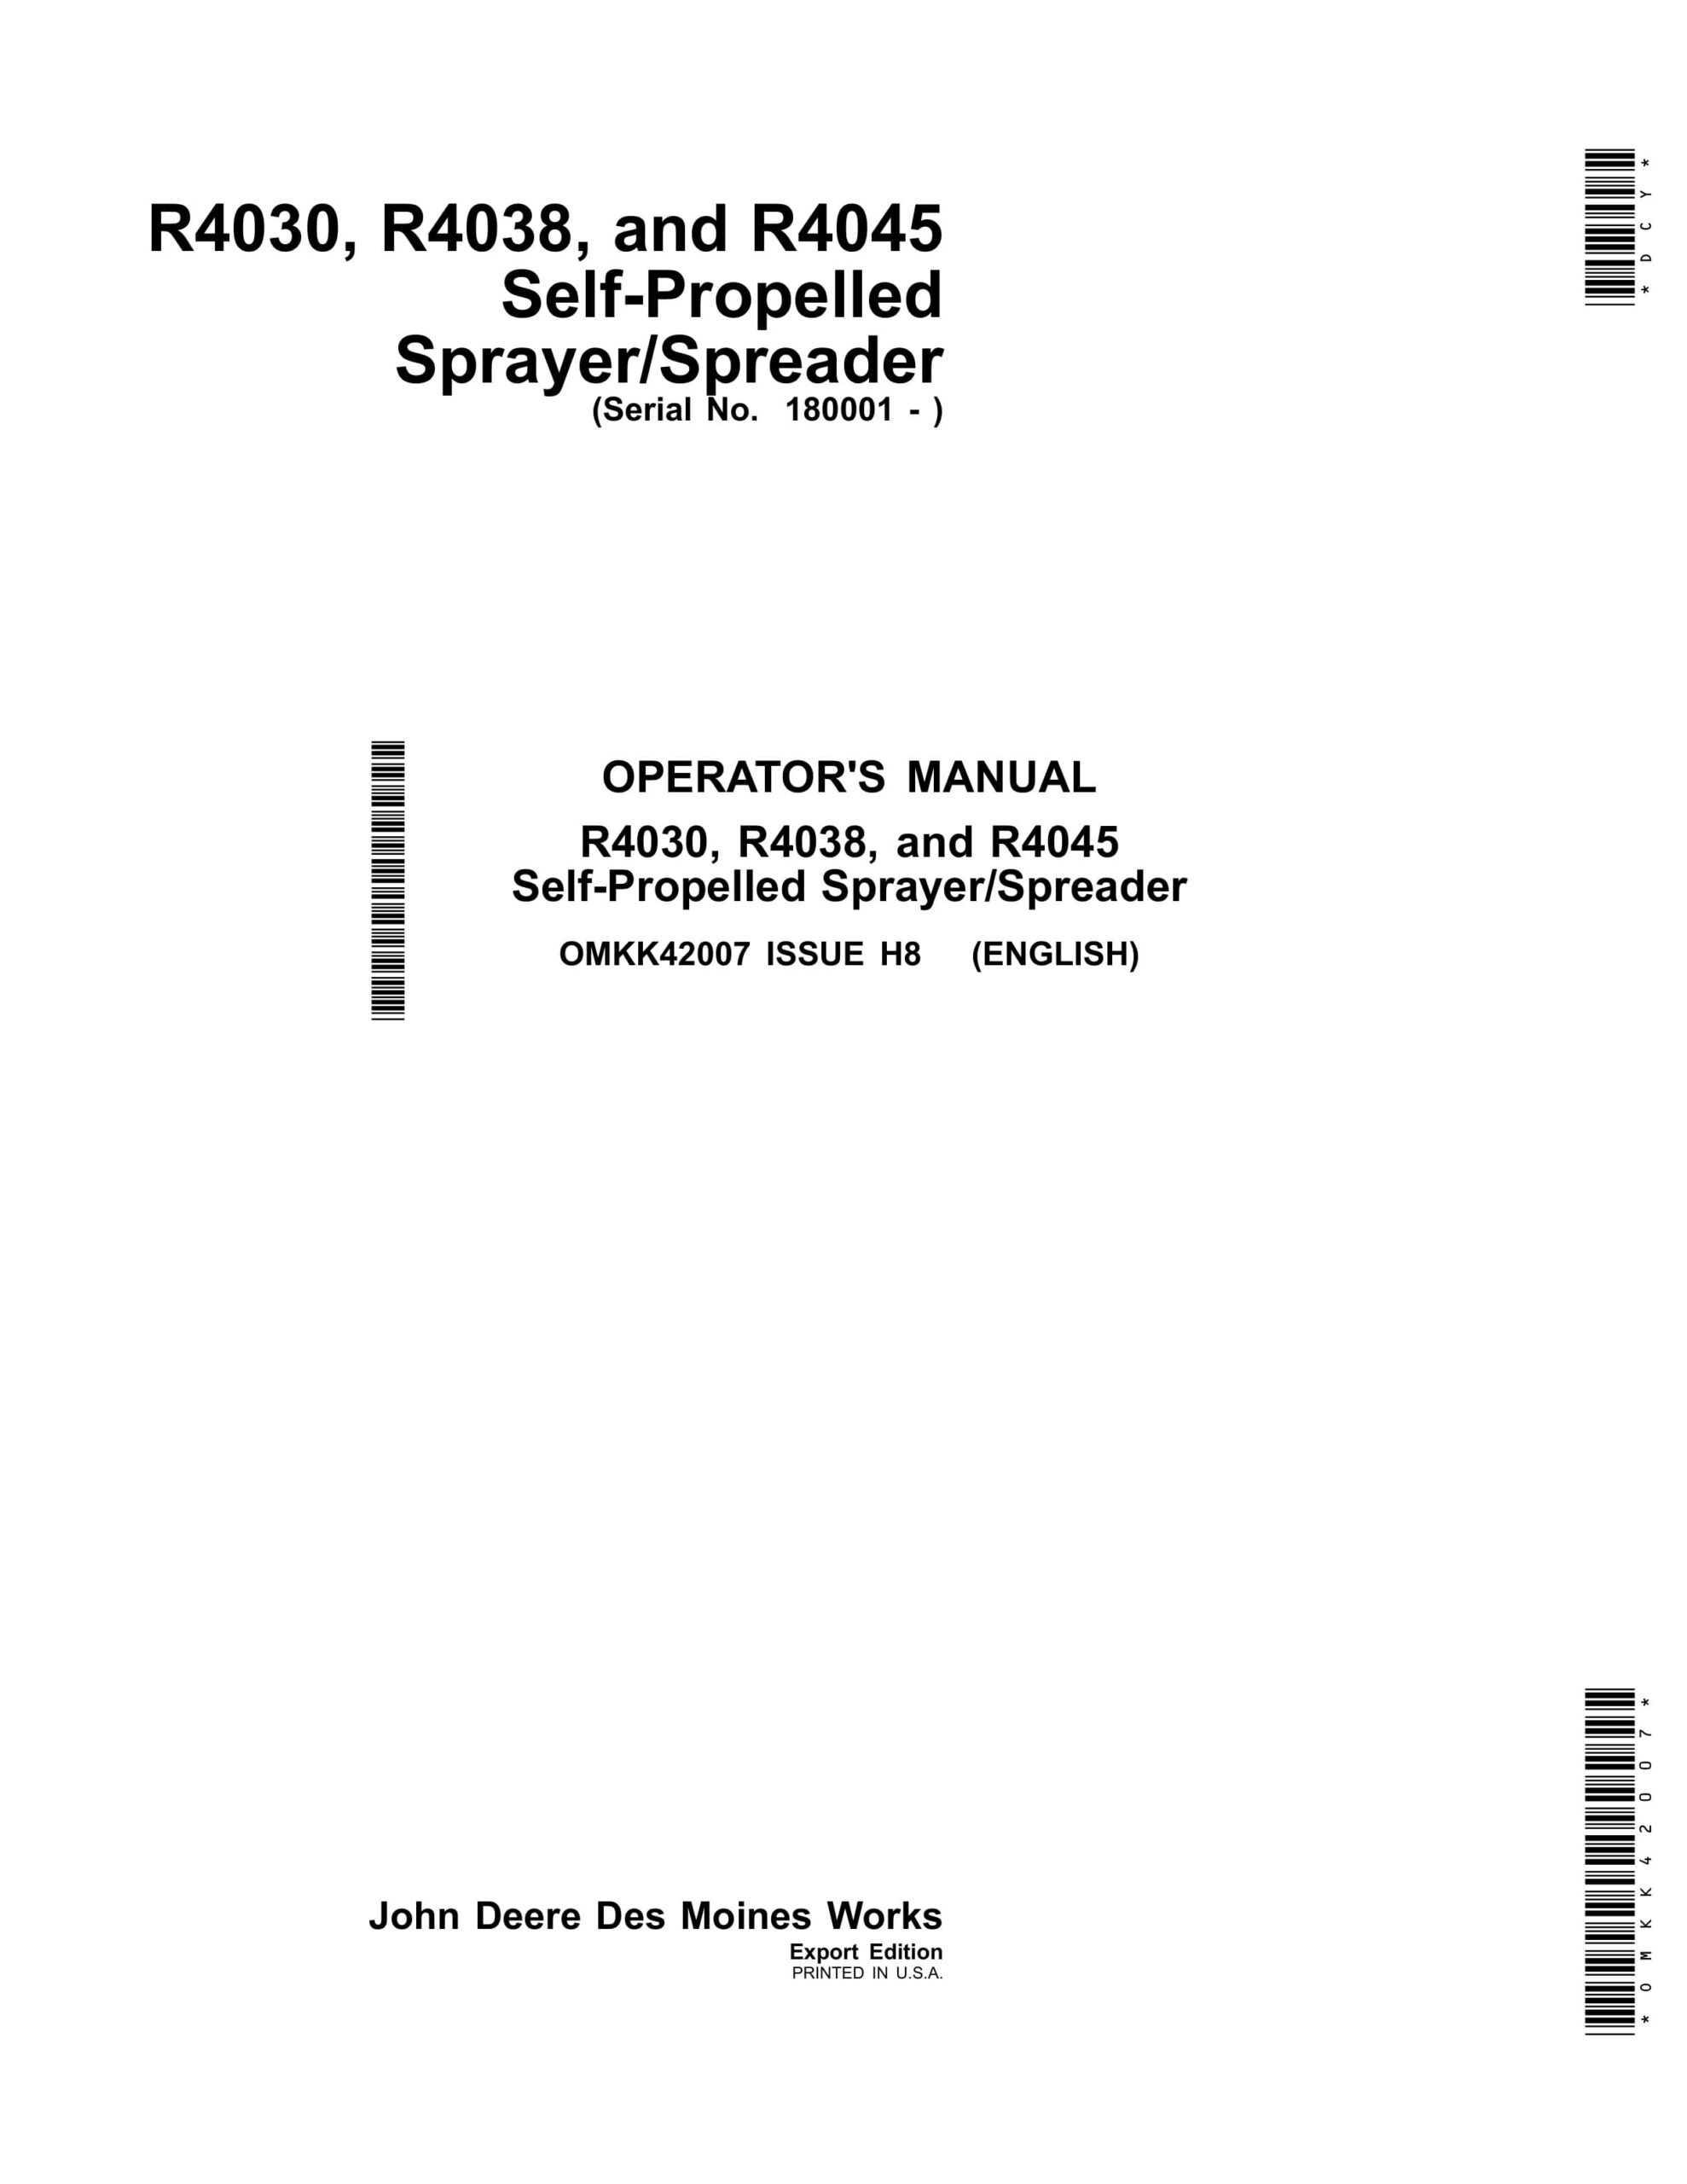 John Deere R4030, R4038, and R4045 Self-Propelled Sprayer Spreader Operator Manual OMKK42007-1